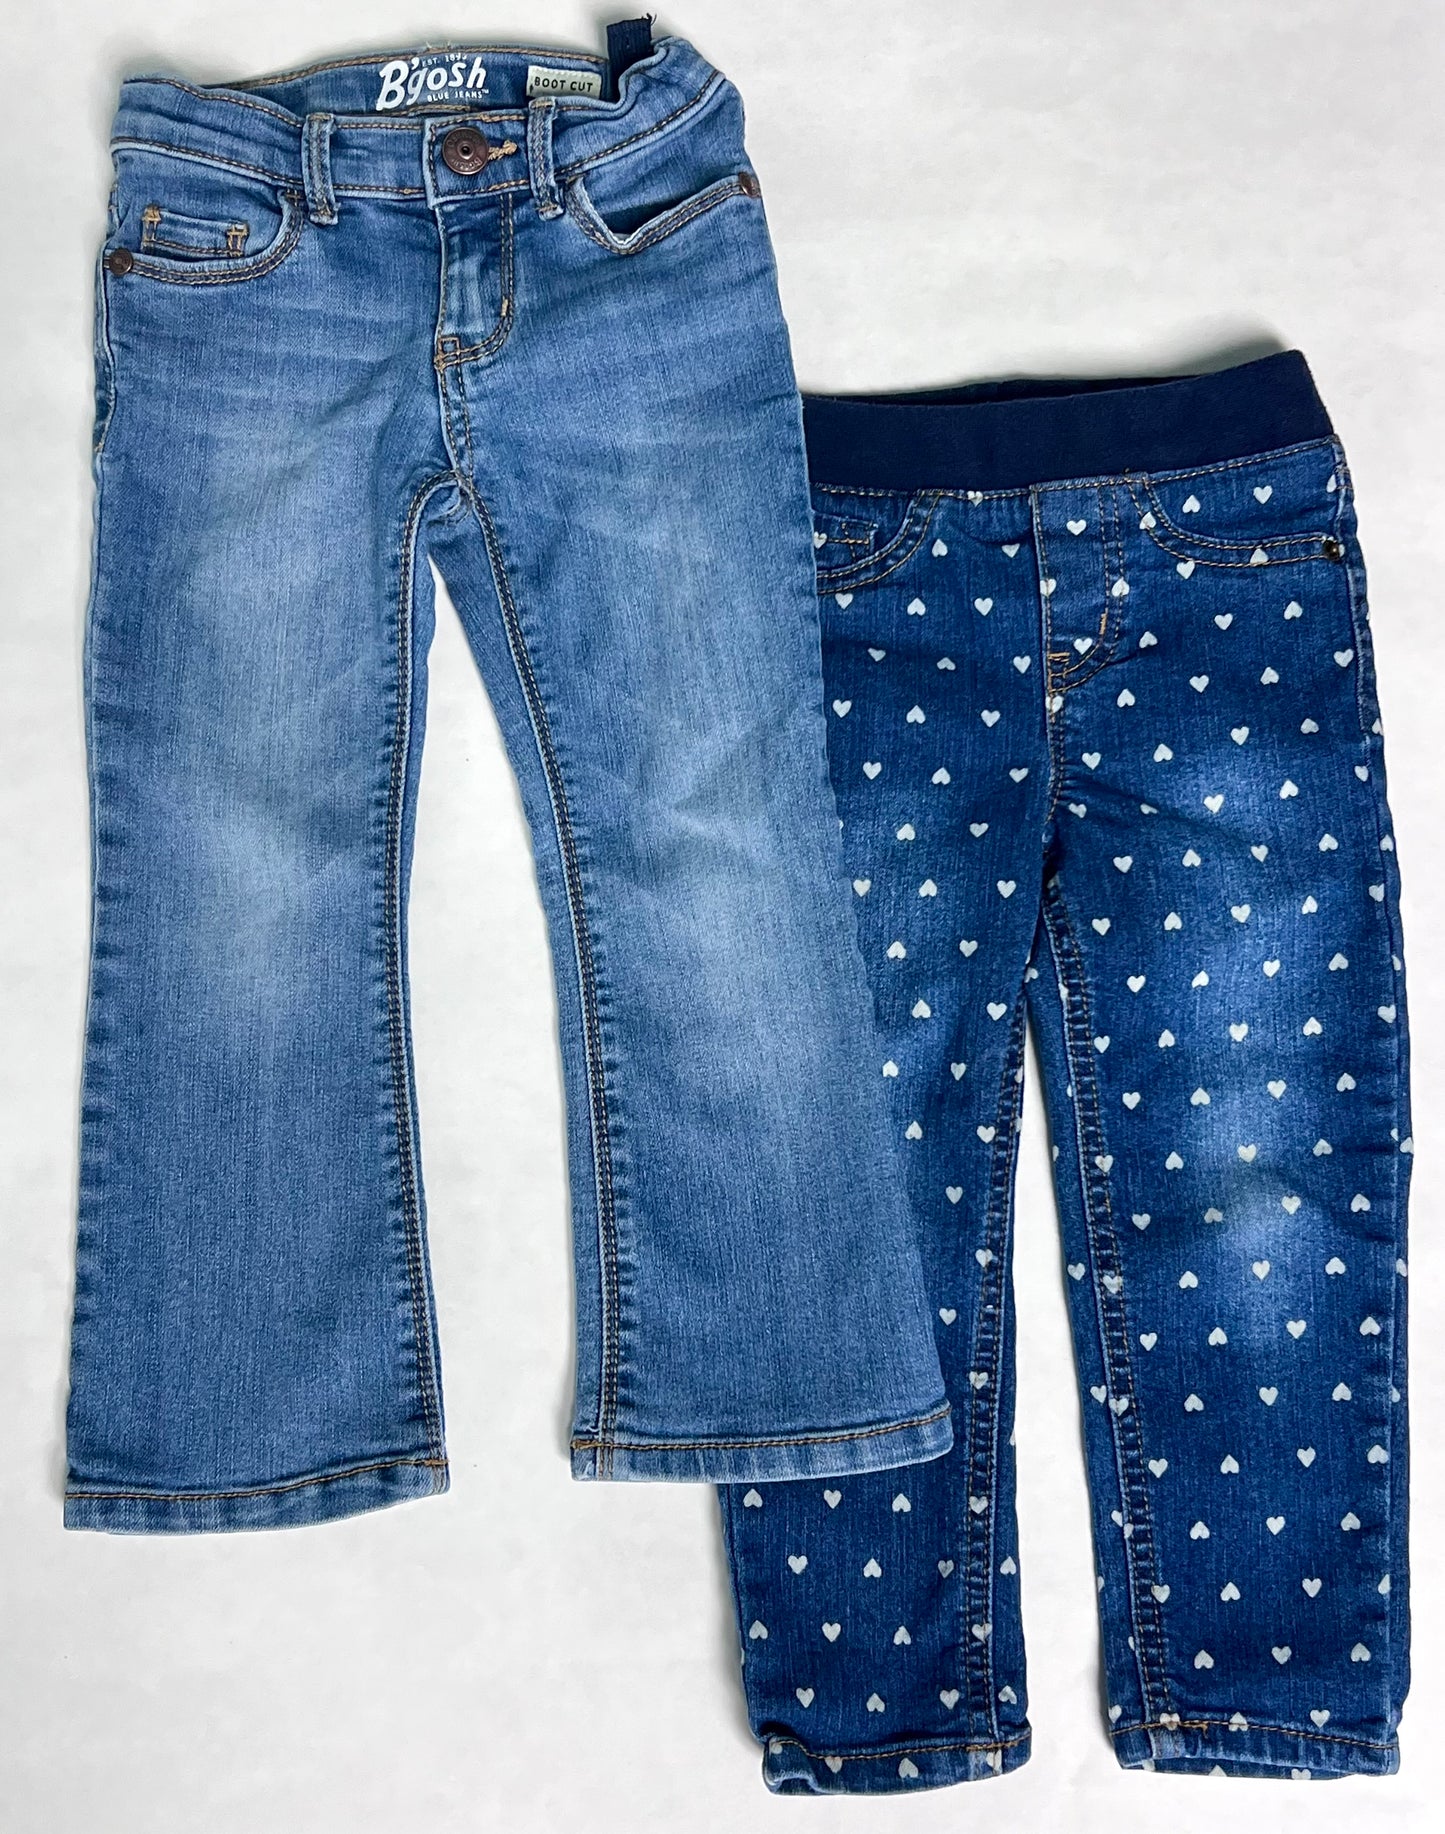 3T girls Osh Kosh B’Gosh boot cut medium wash denim with adjustable waist, VGUC. Cat & Jack dark denim with hearts and elastic waist, GUC. Toddler denim jeans bundle.